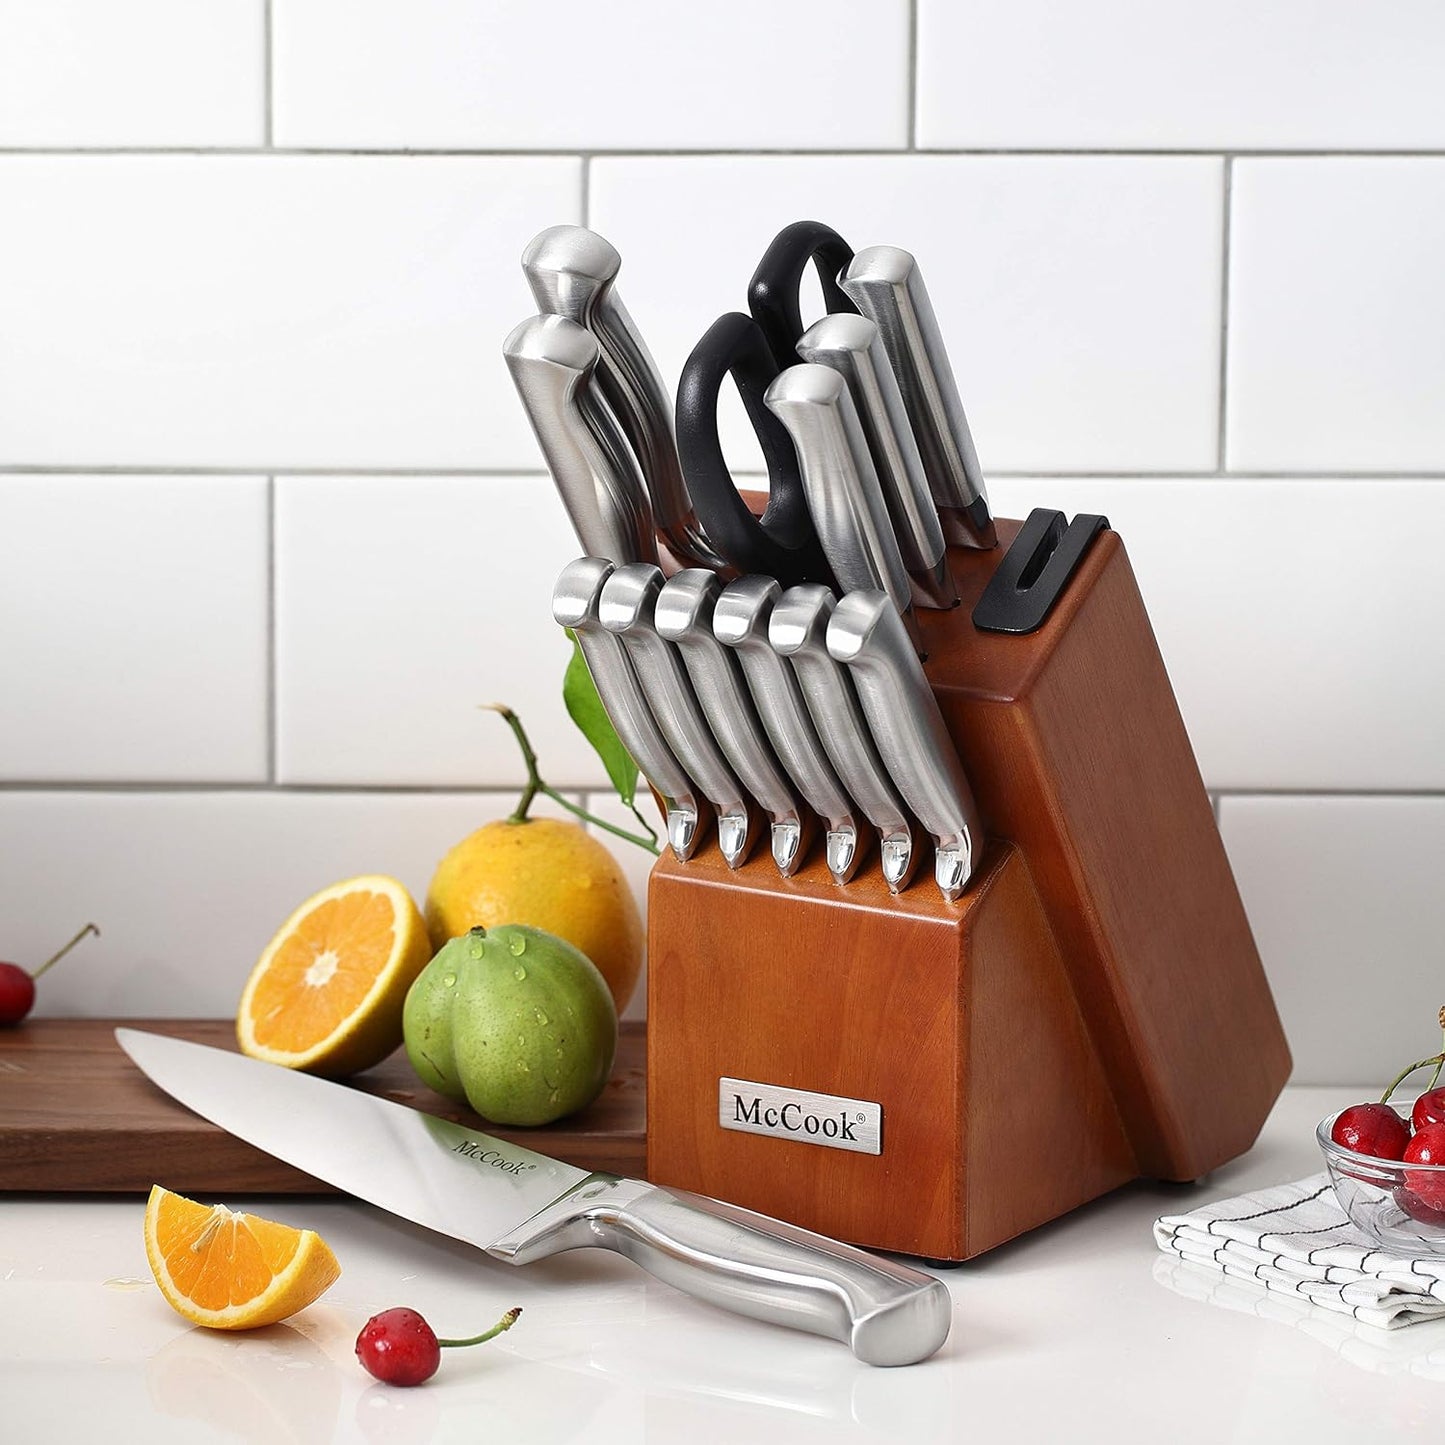 Knife Sets, German Stainless Steel Kitchen Knife Block Sets with Built-In Sharpener